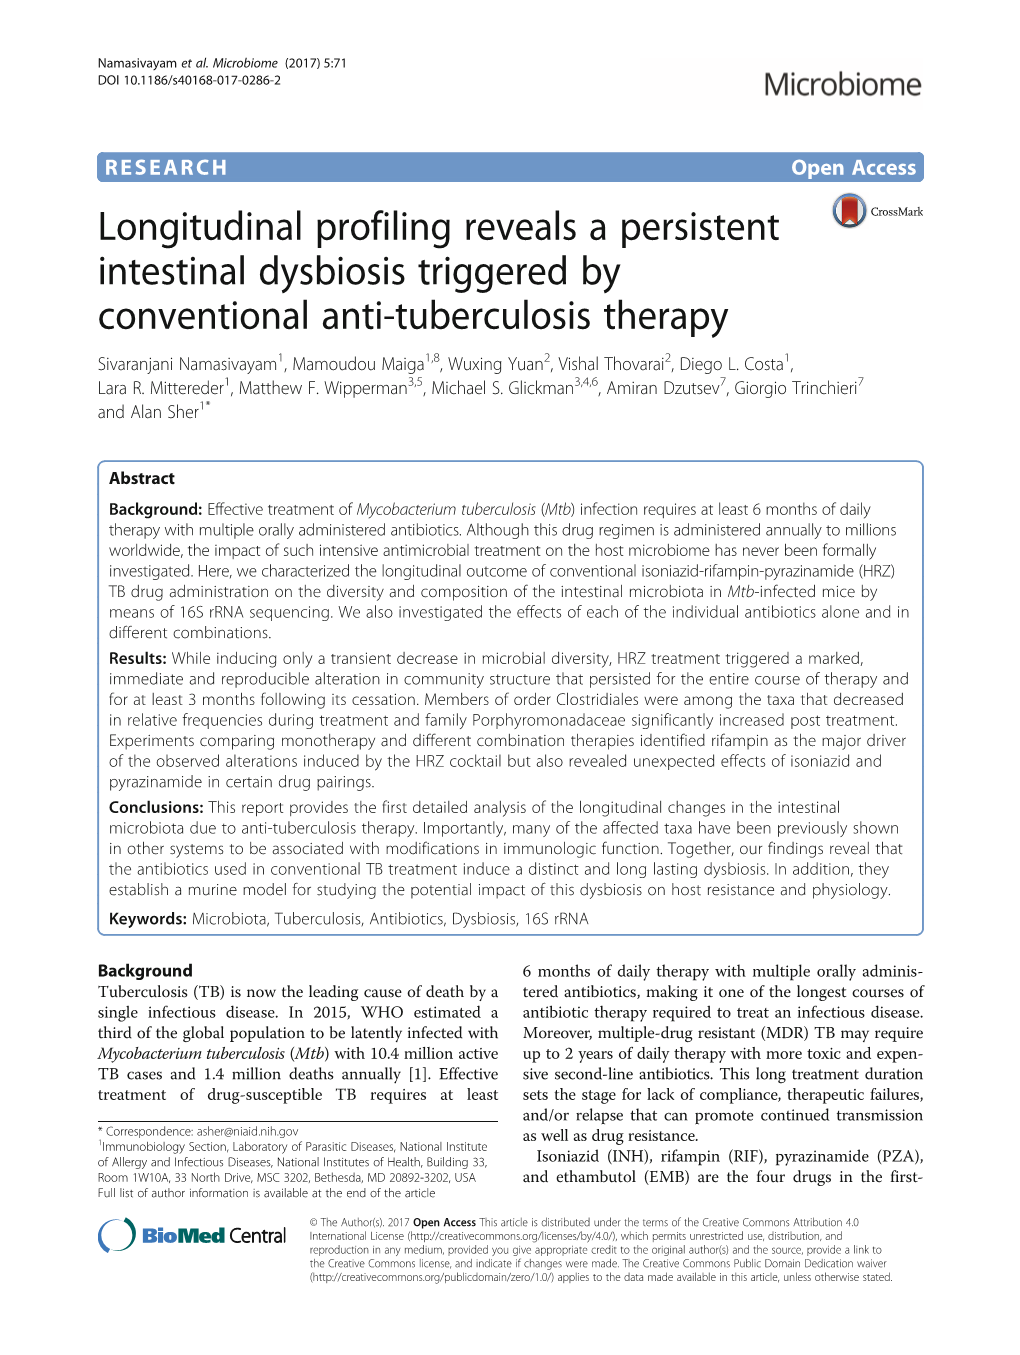 Longitudinal Profiling Reveals a Persistent Intestinal Dysbiosis